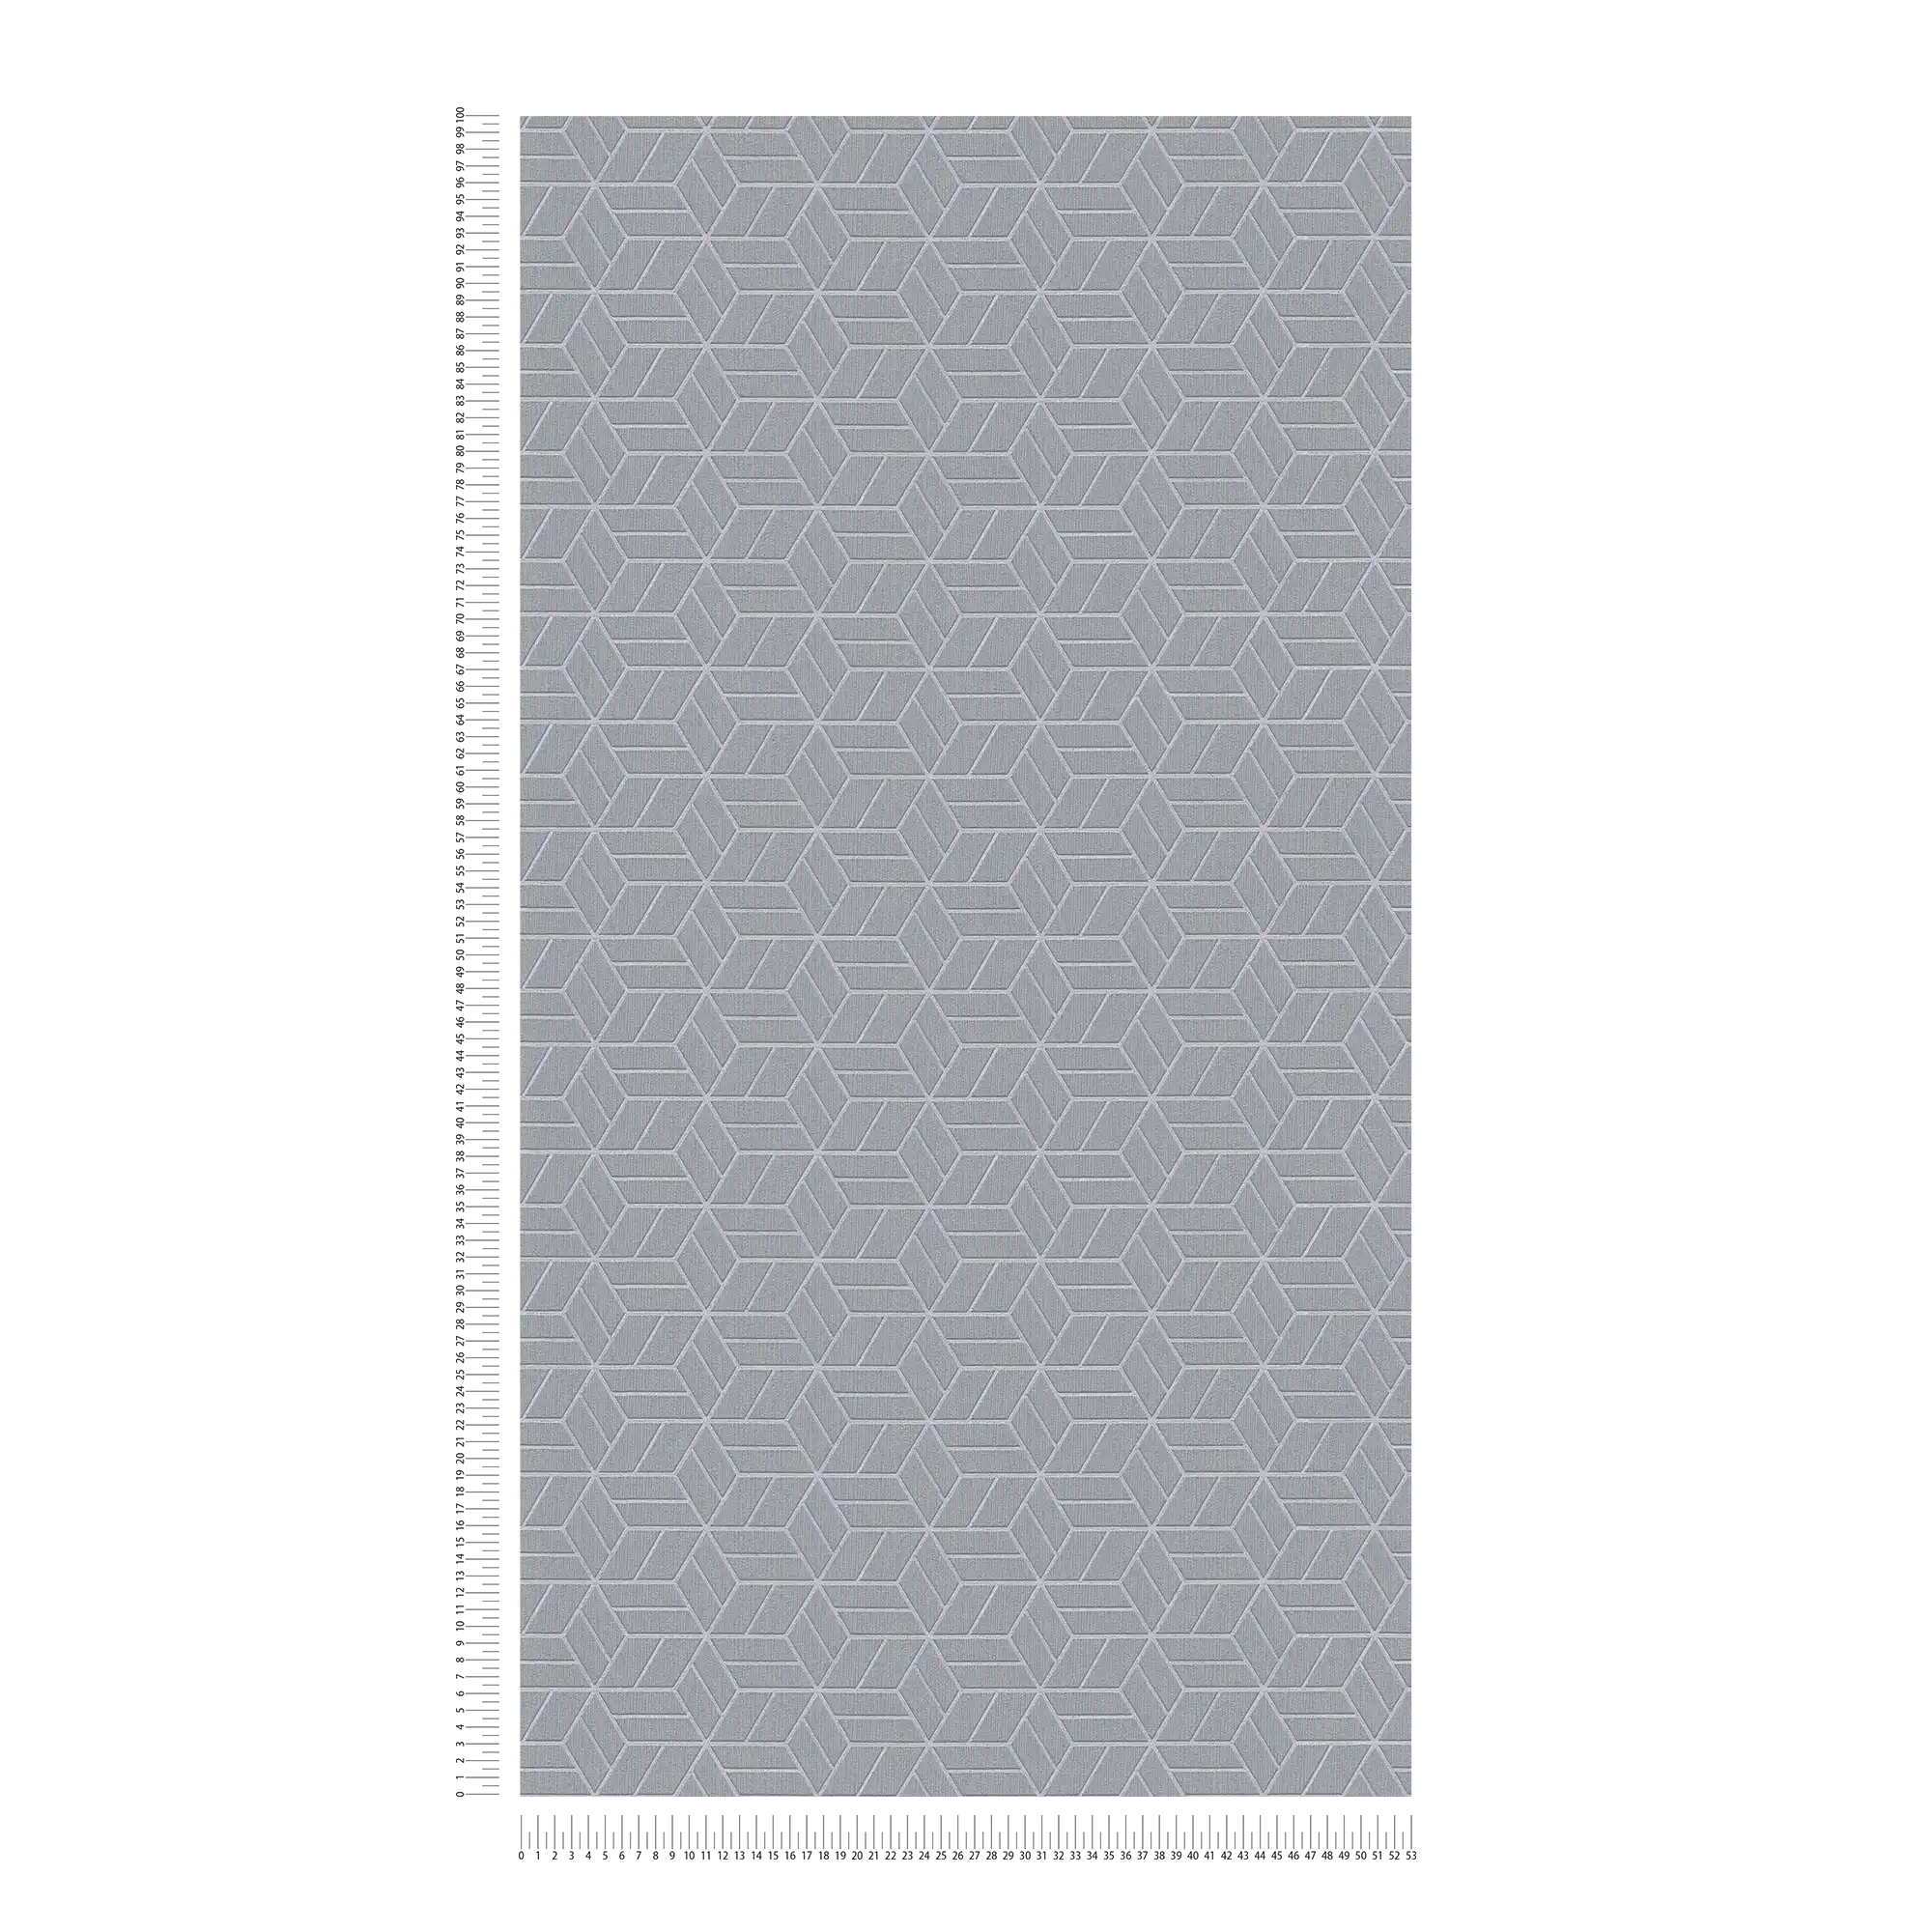             behang geometrisch patroon & glittereffect - grijs, zilver
        